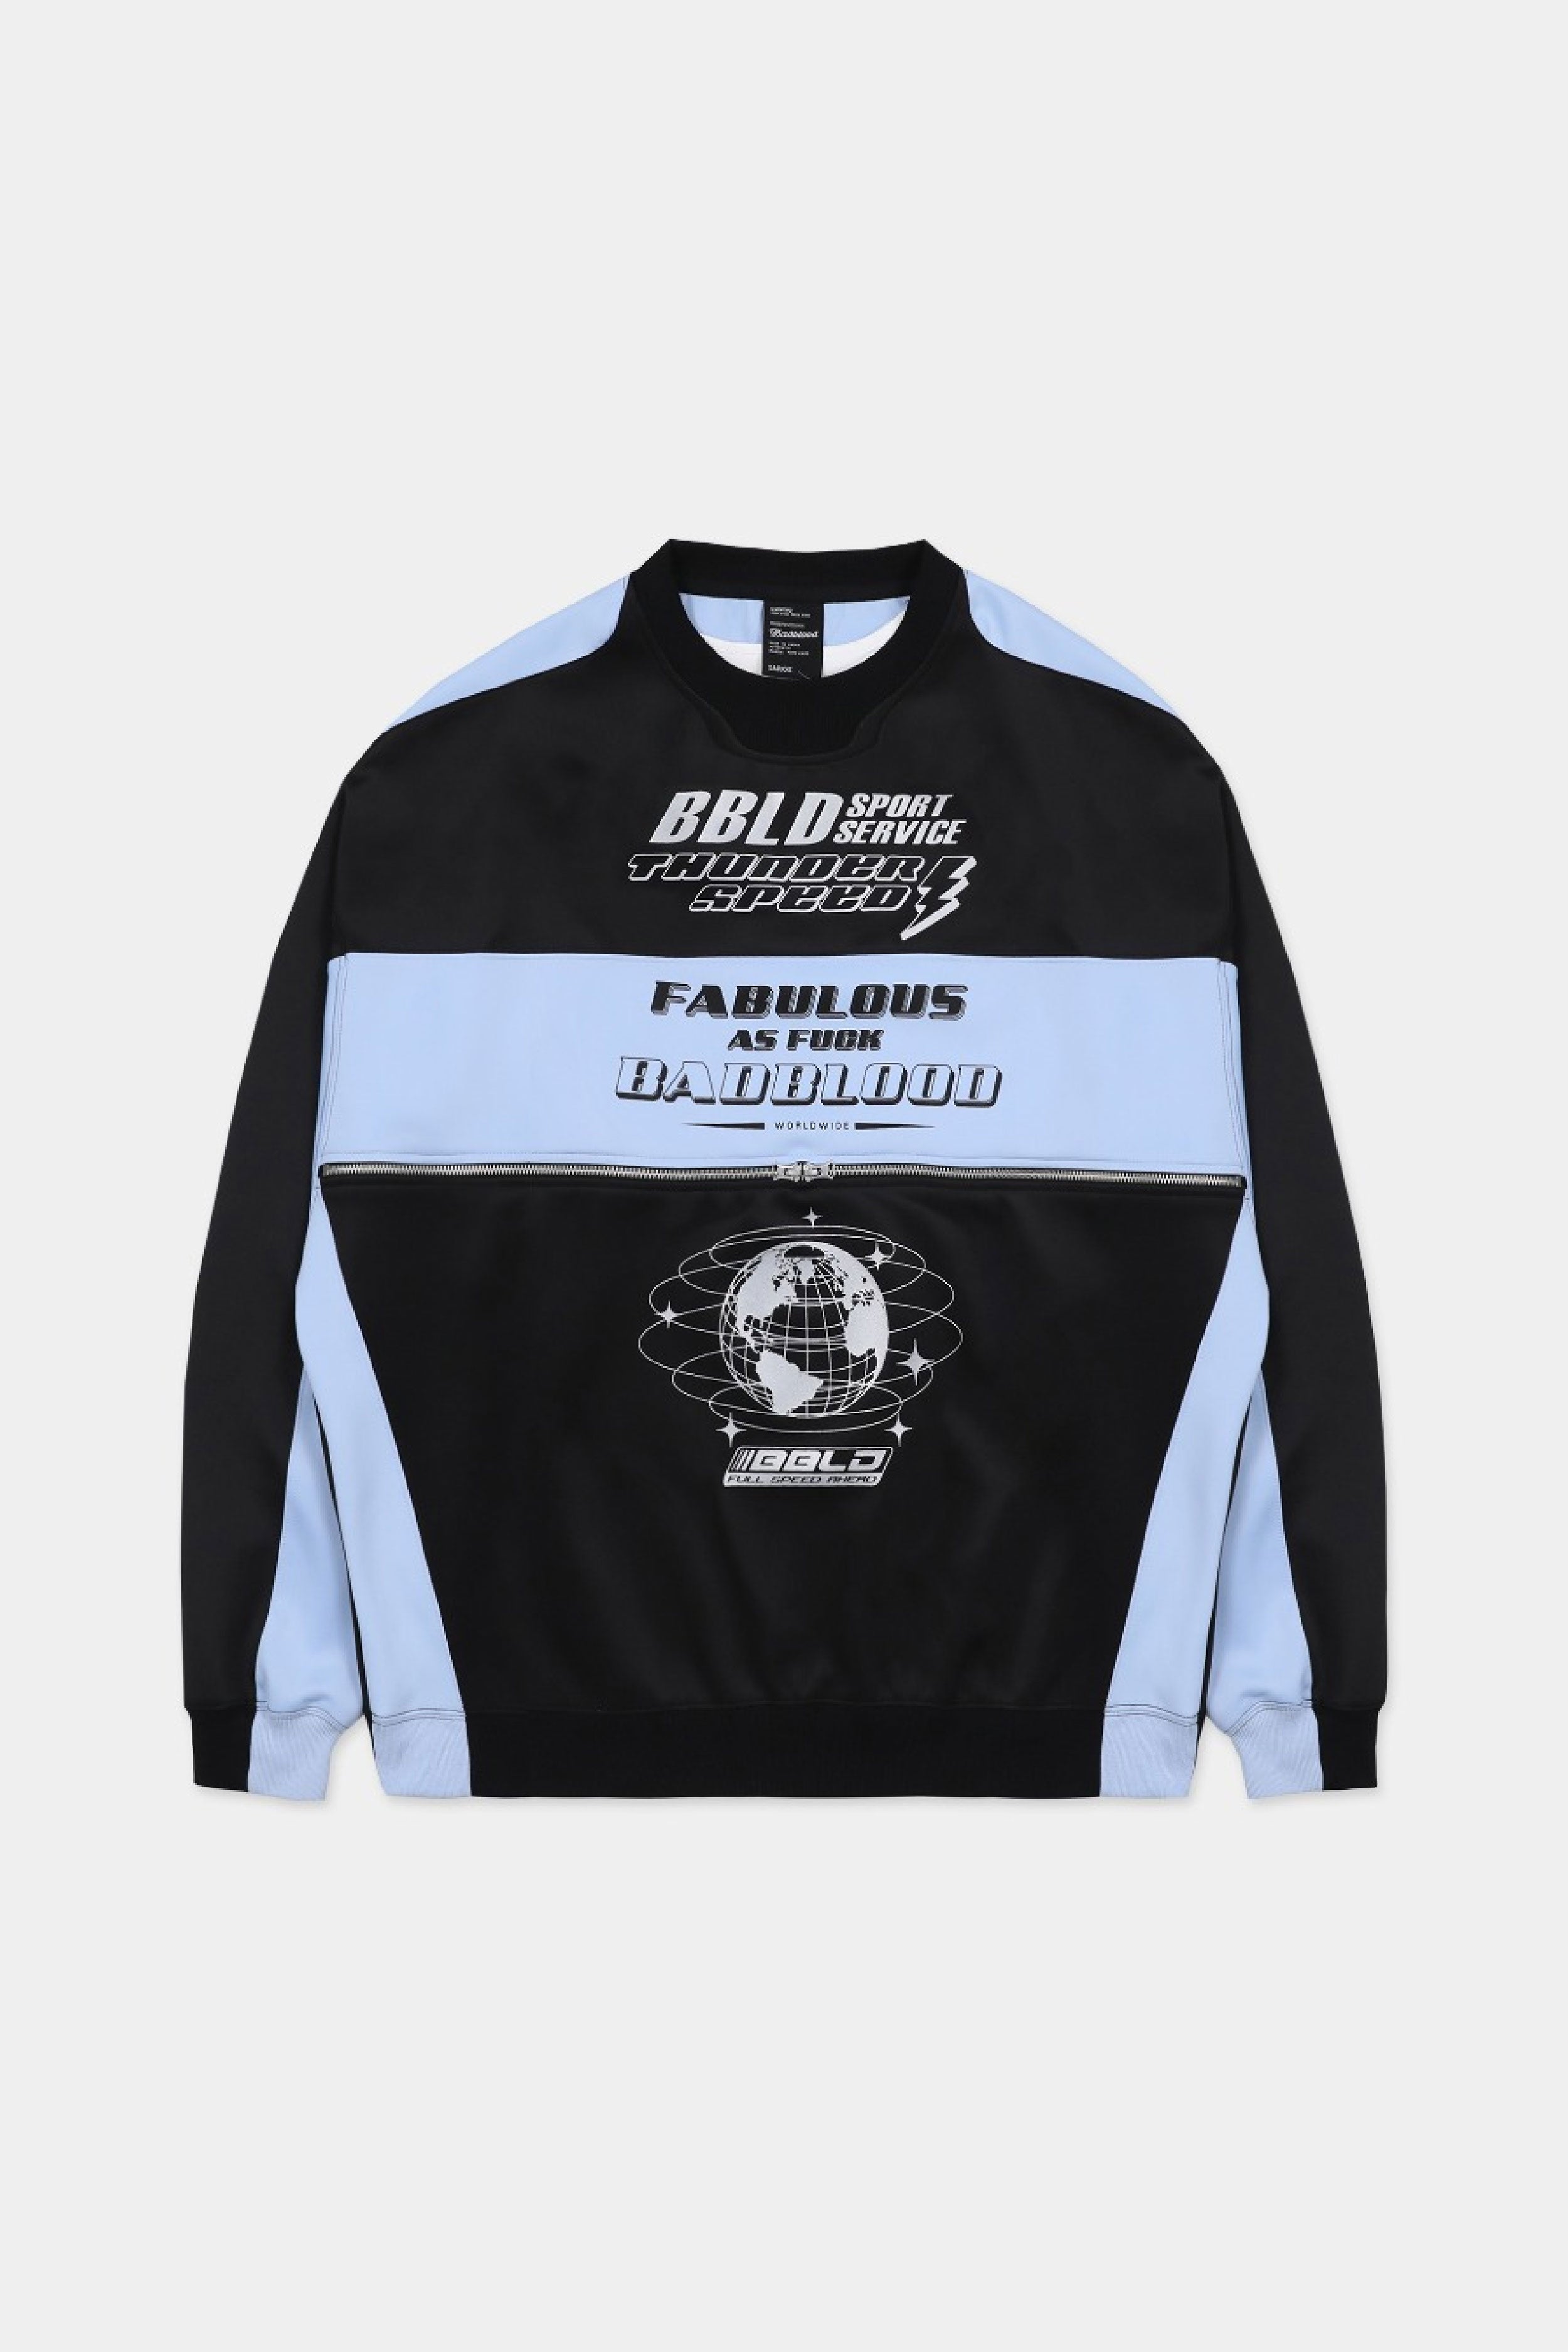 Badblood Fabulous Sports Sweatshirt Blue/Black